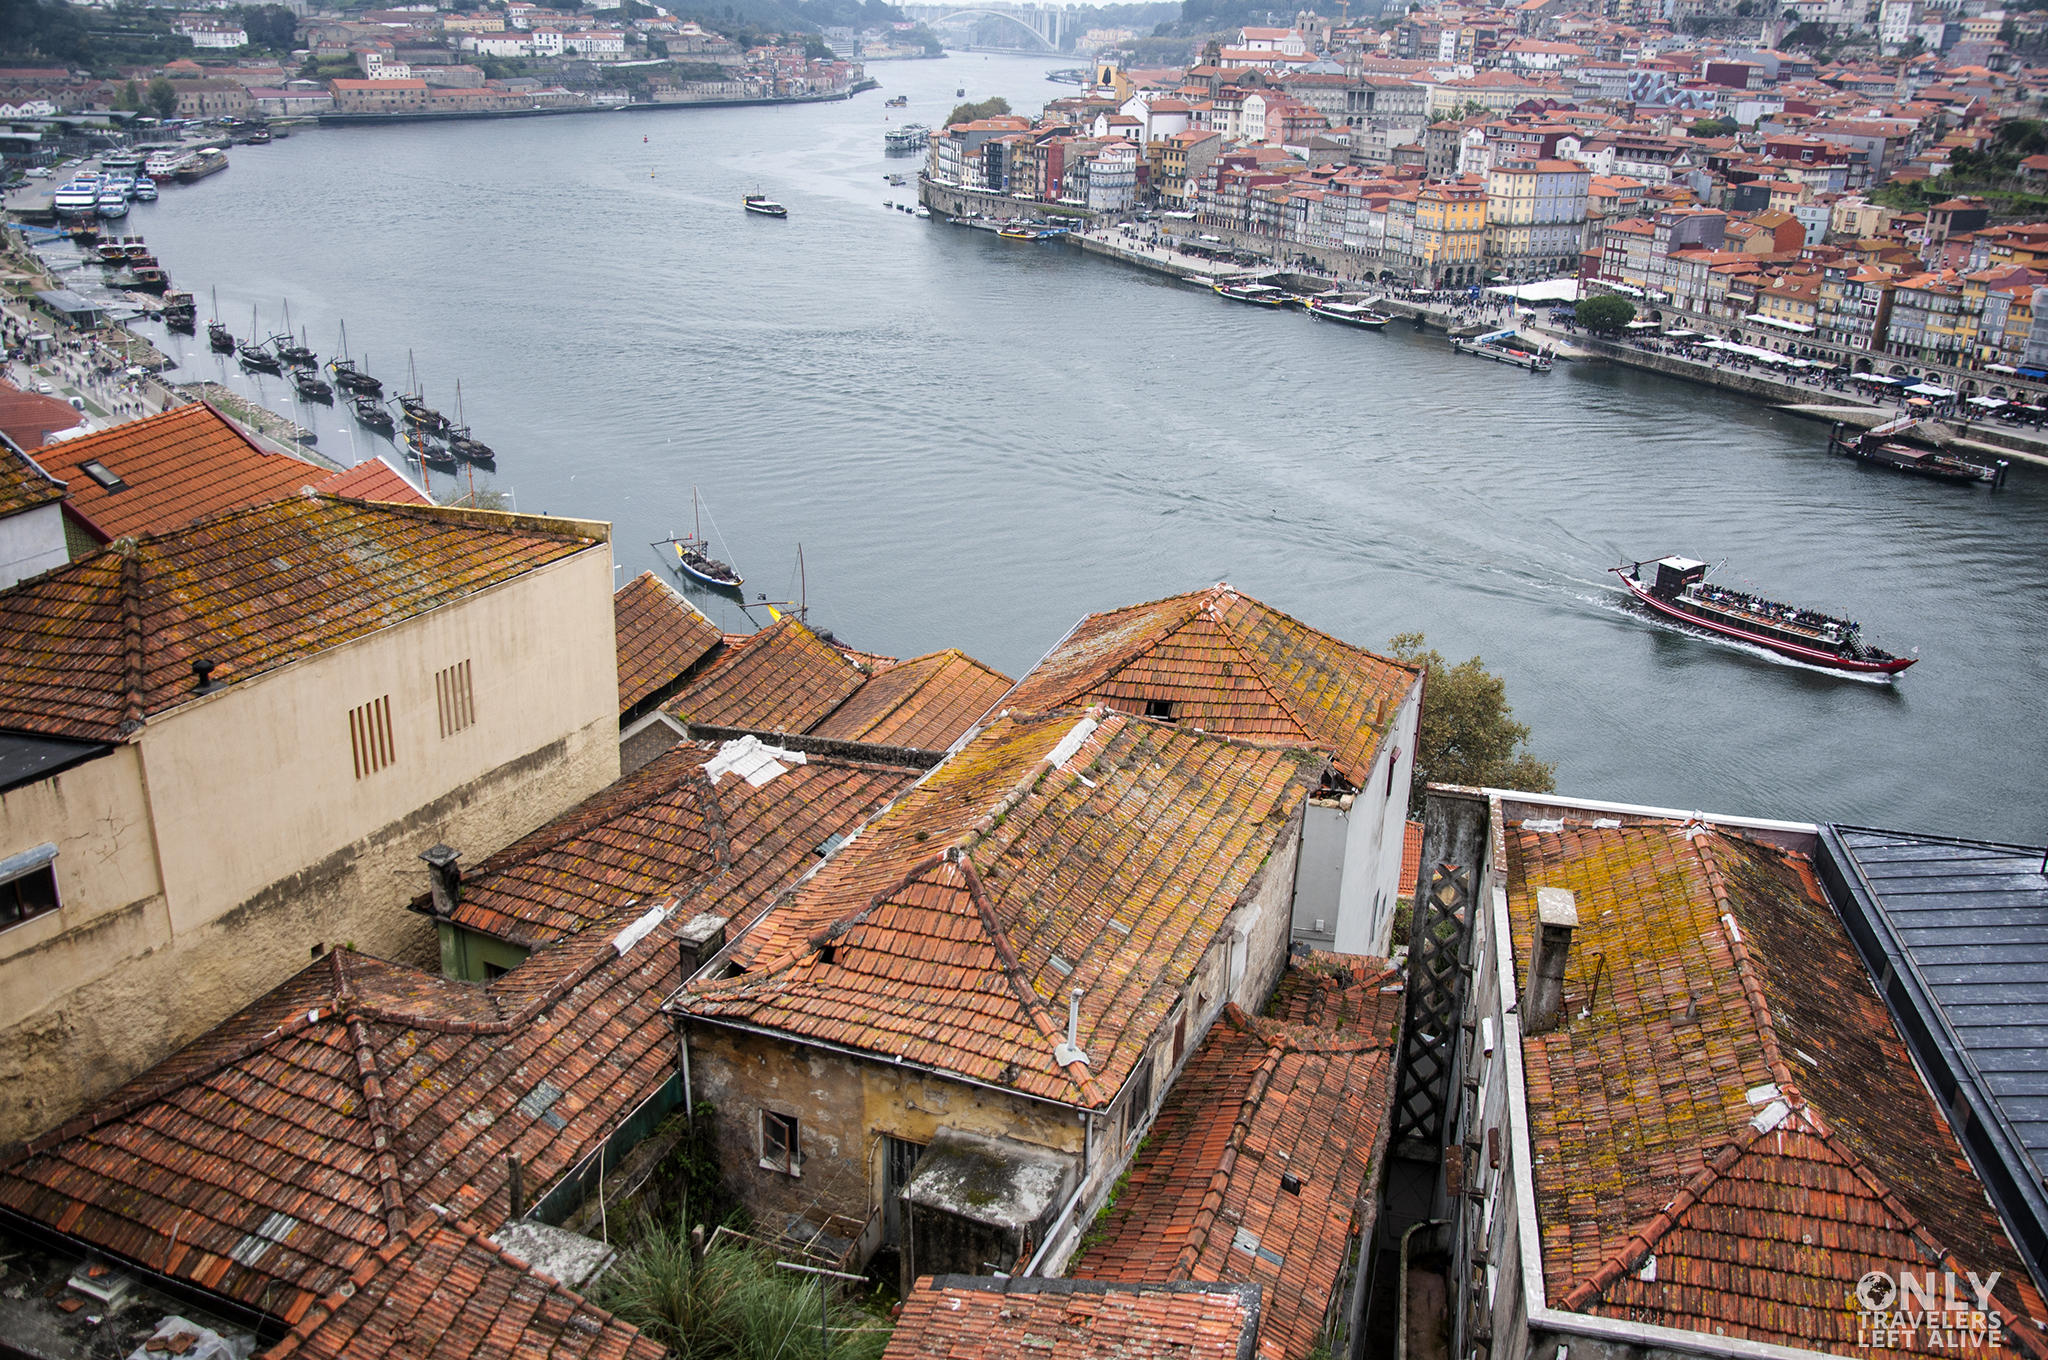 Porto only travelers left alive